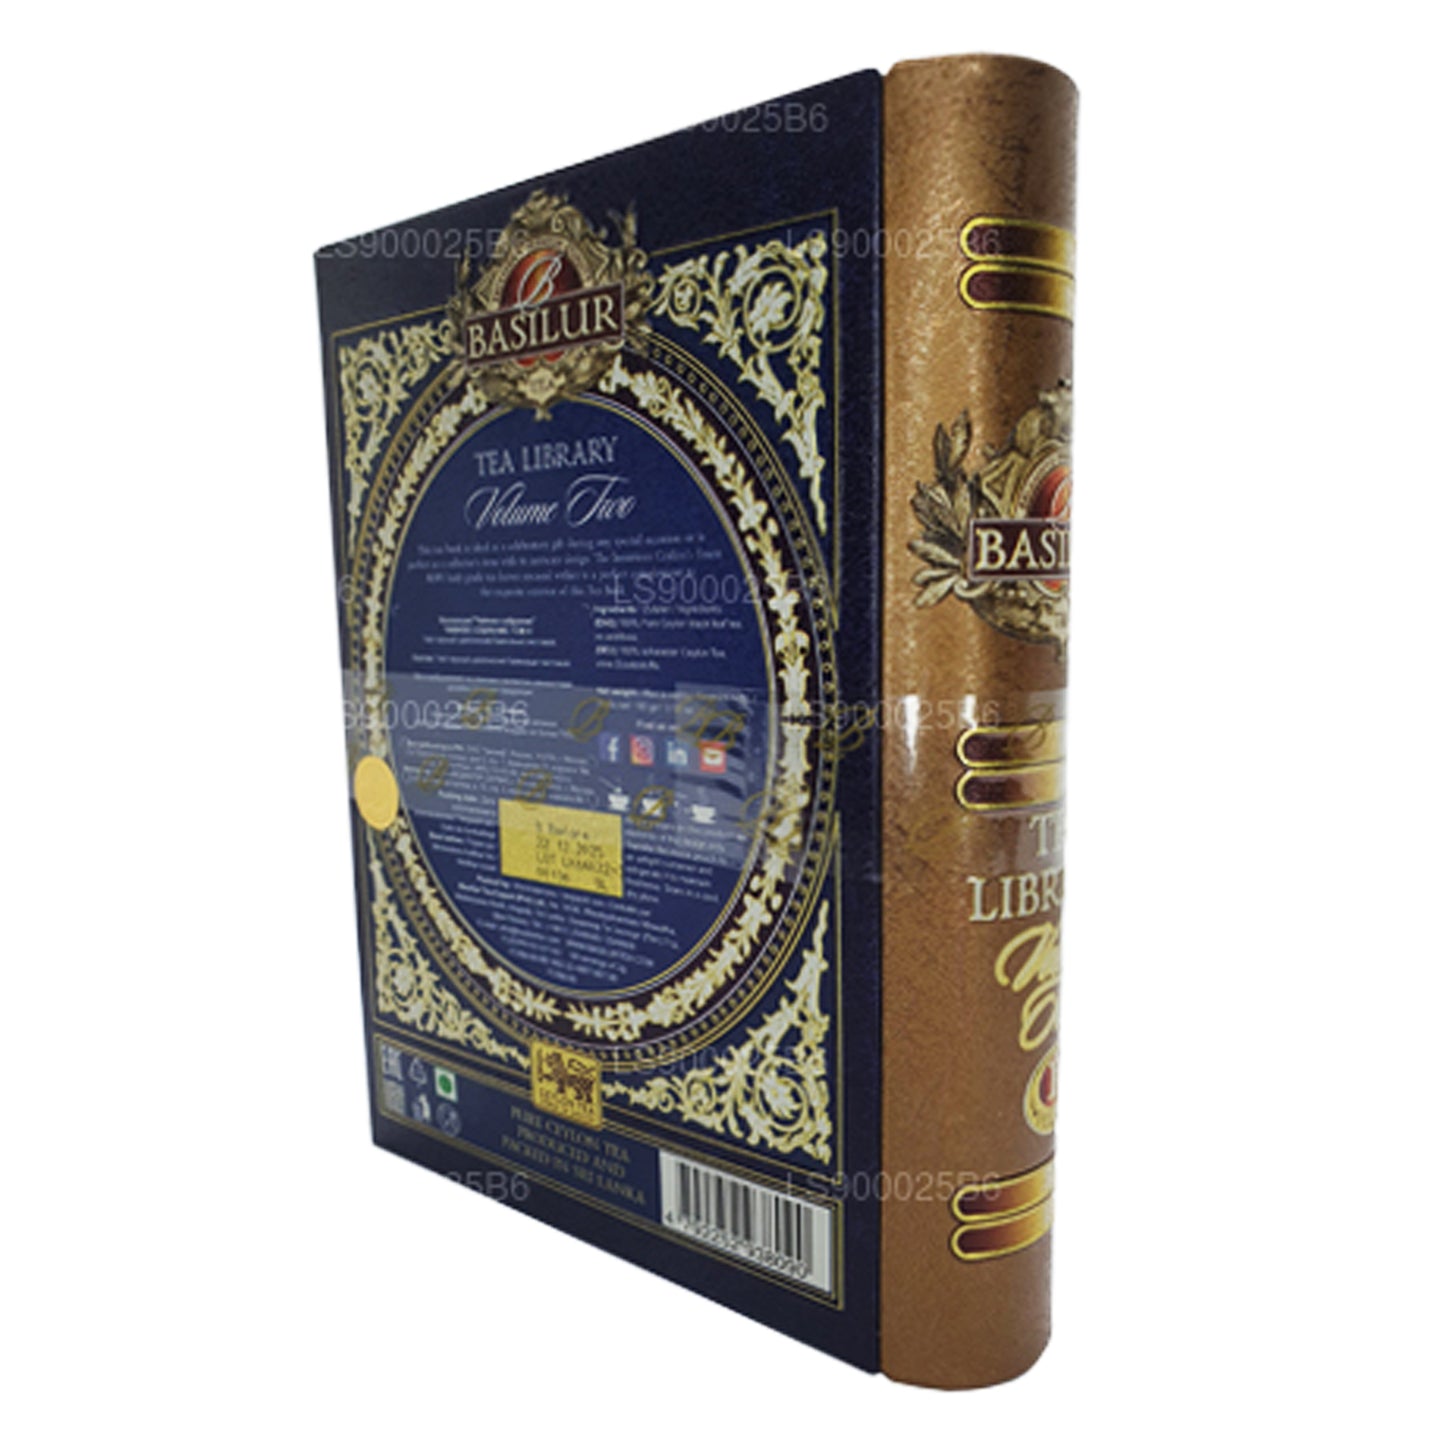 Basilur Teebuch „Tea Library Volume Two“ (100 g) Caddy